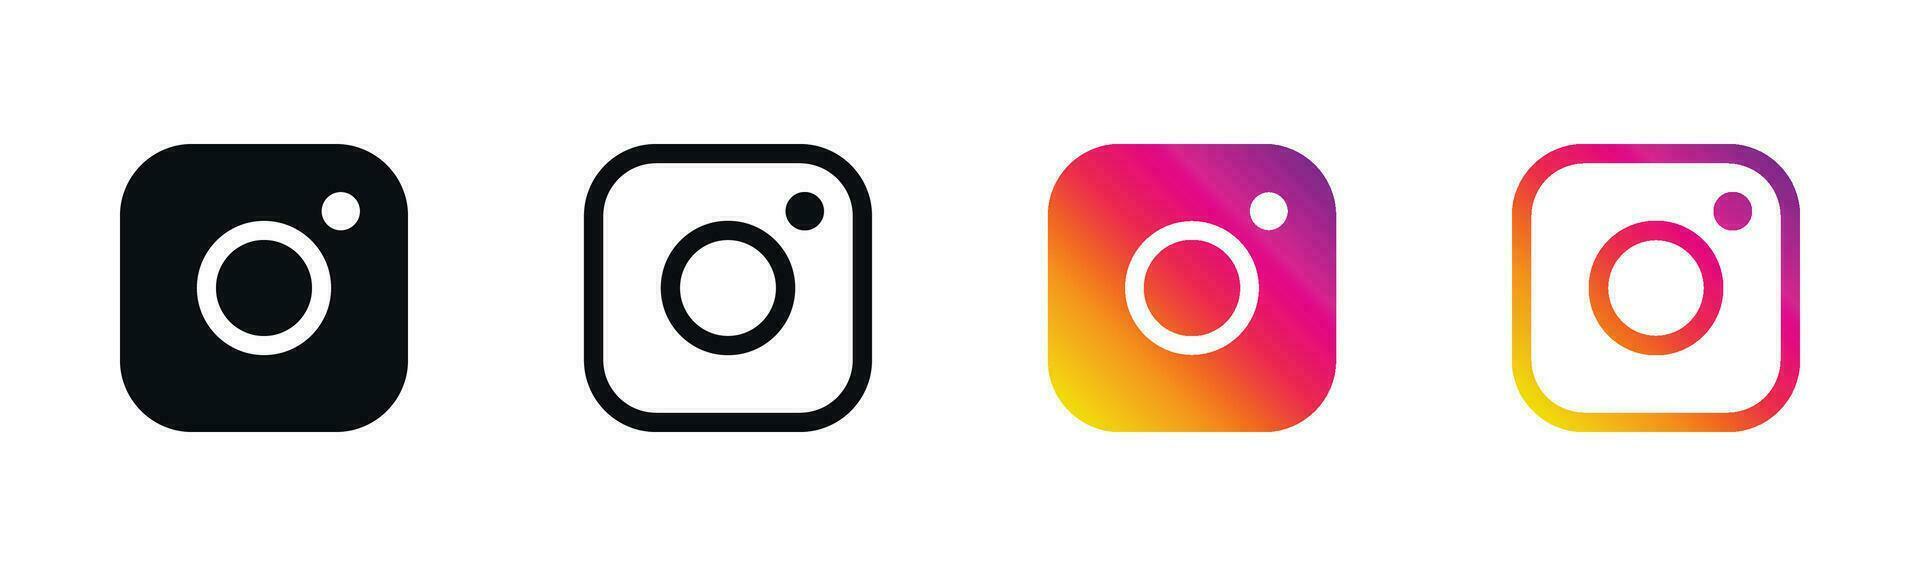 Instagram Brand Logo Icons Set - Social Media Symbols Vector Graphics